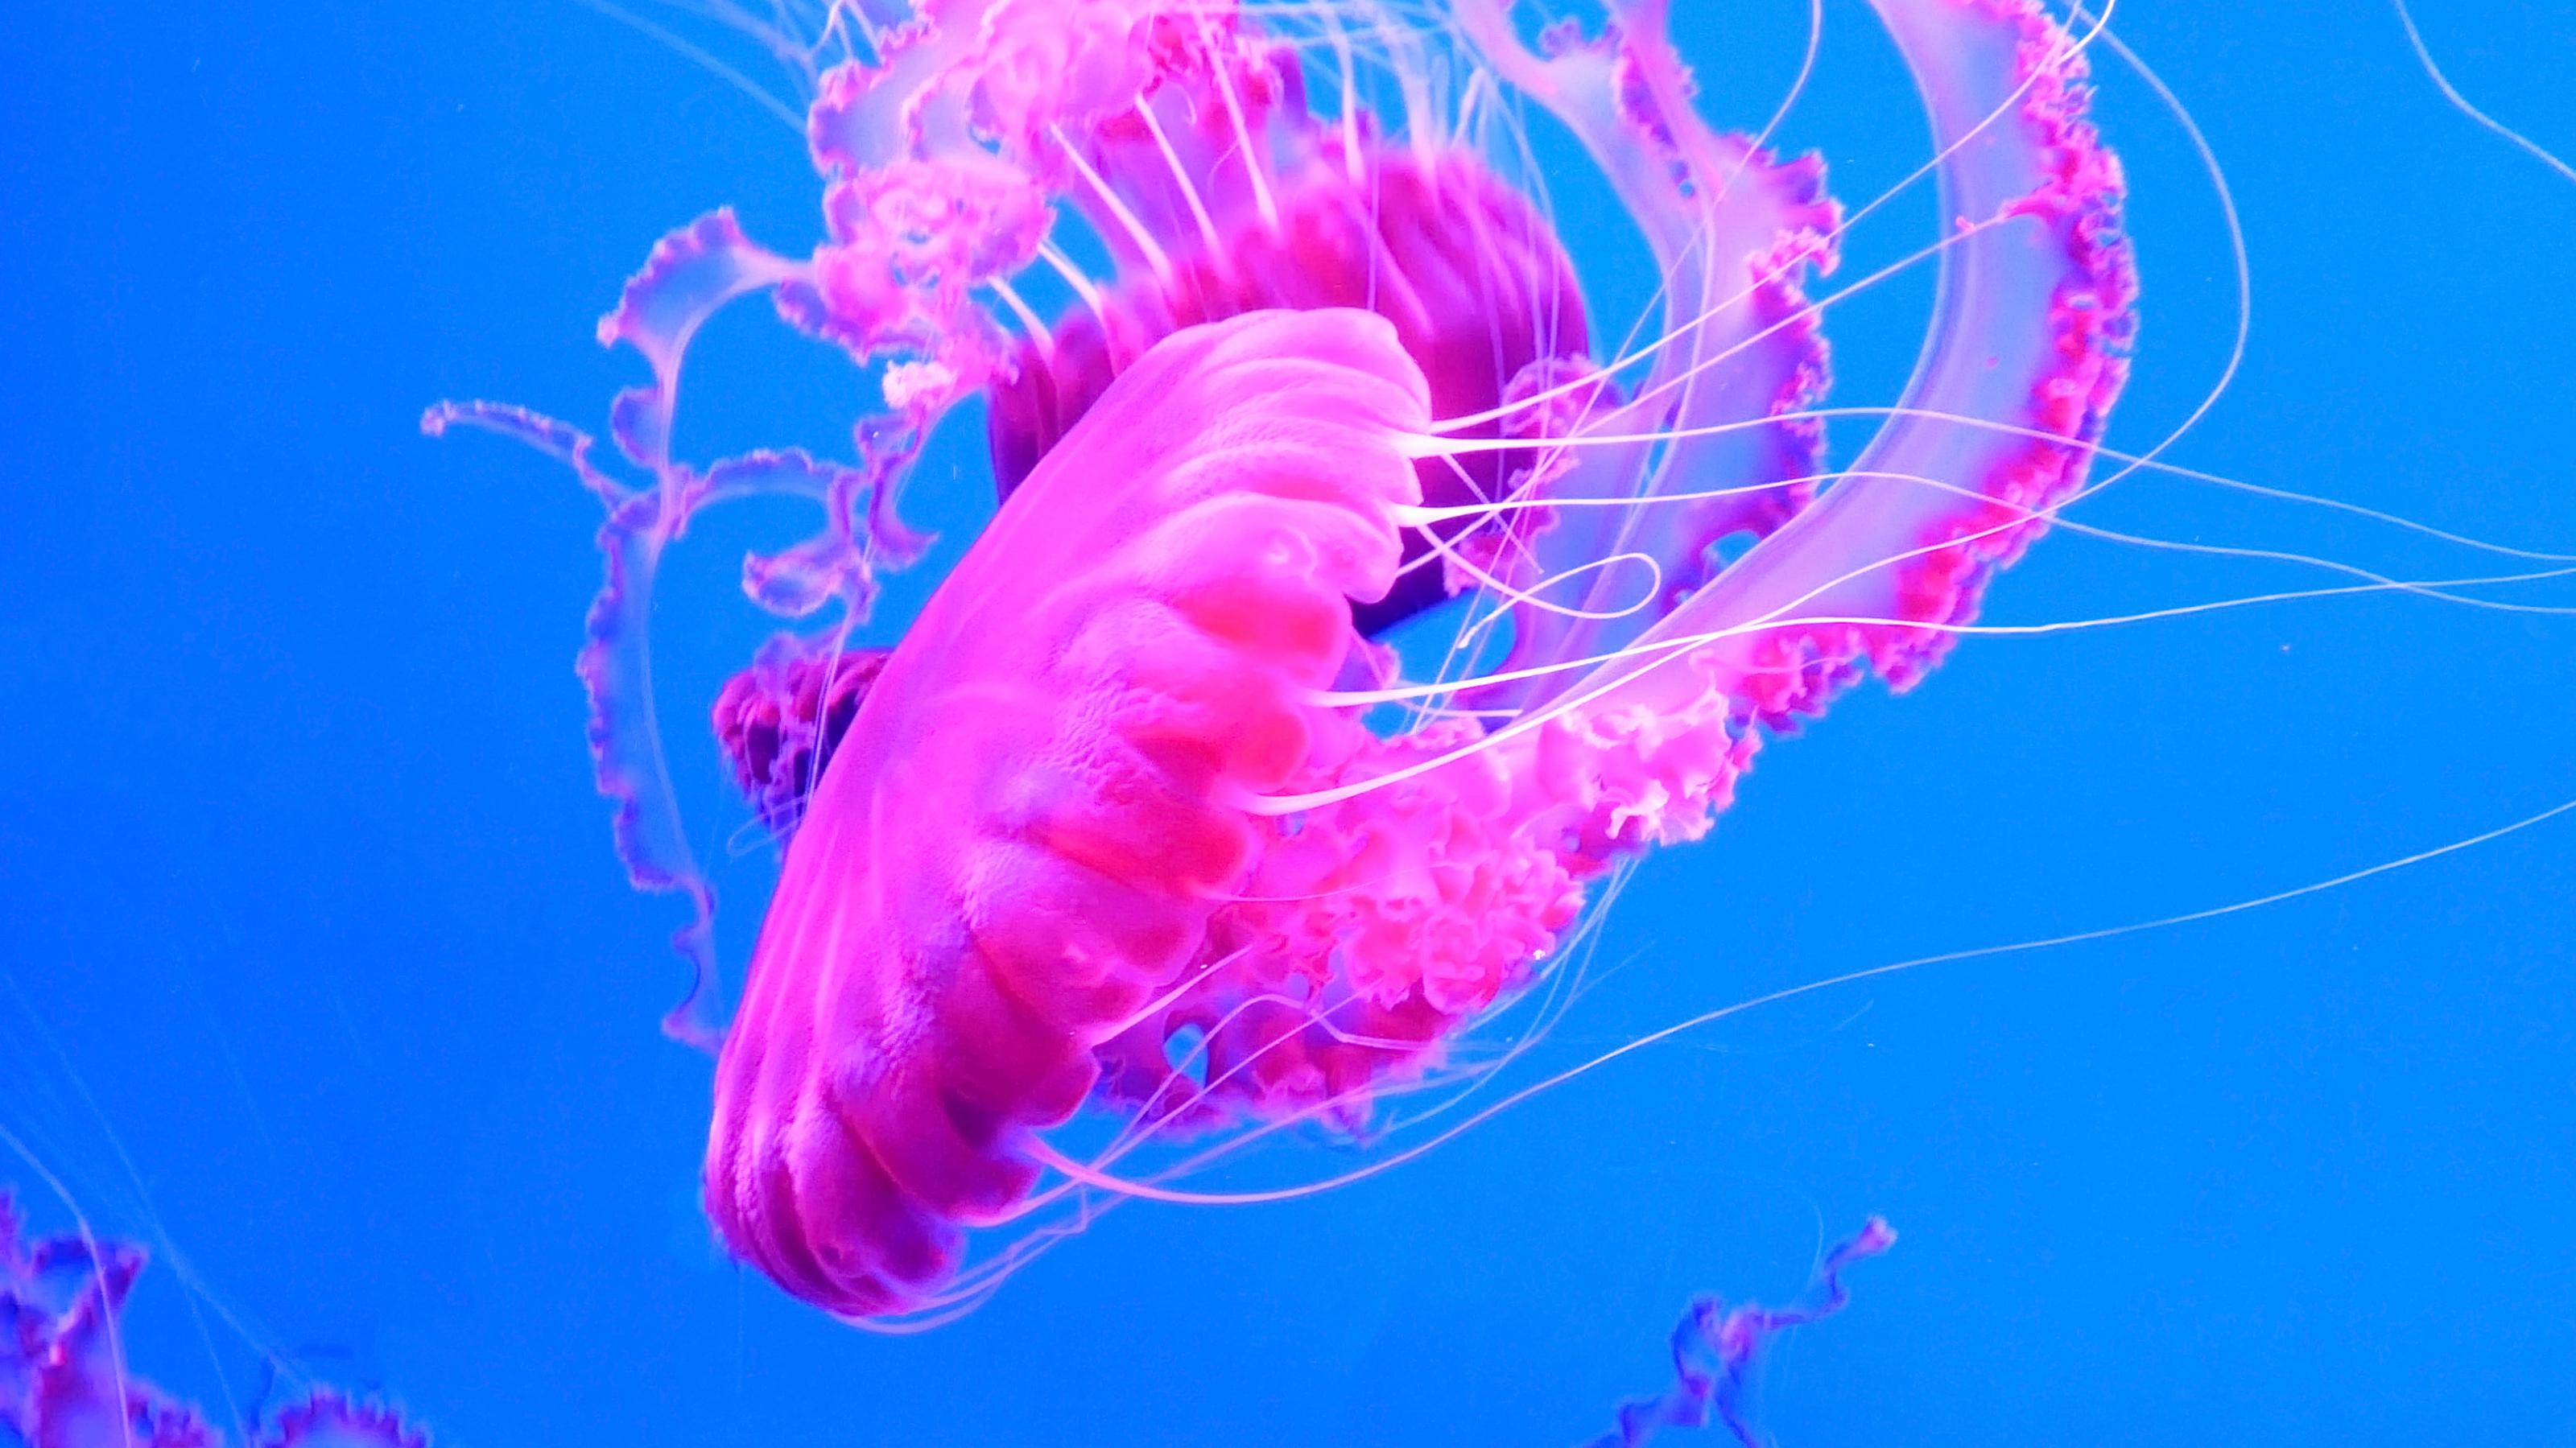 pink jellyfish swims in blue ocean sea, dangerous poisonous jellyfish Pelagia Noctiluca (Acalefo luminiscenta), Tenerife, Canary Island